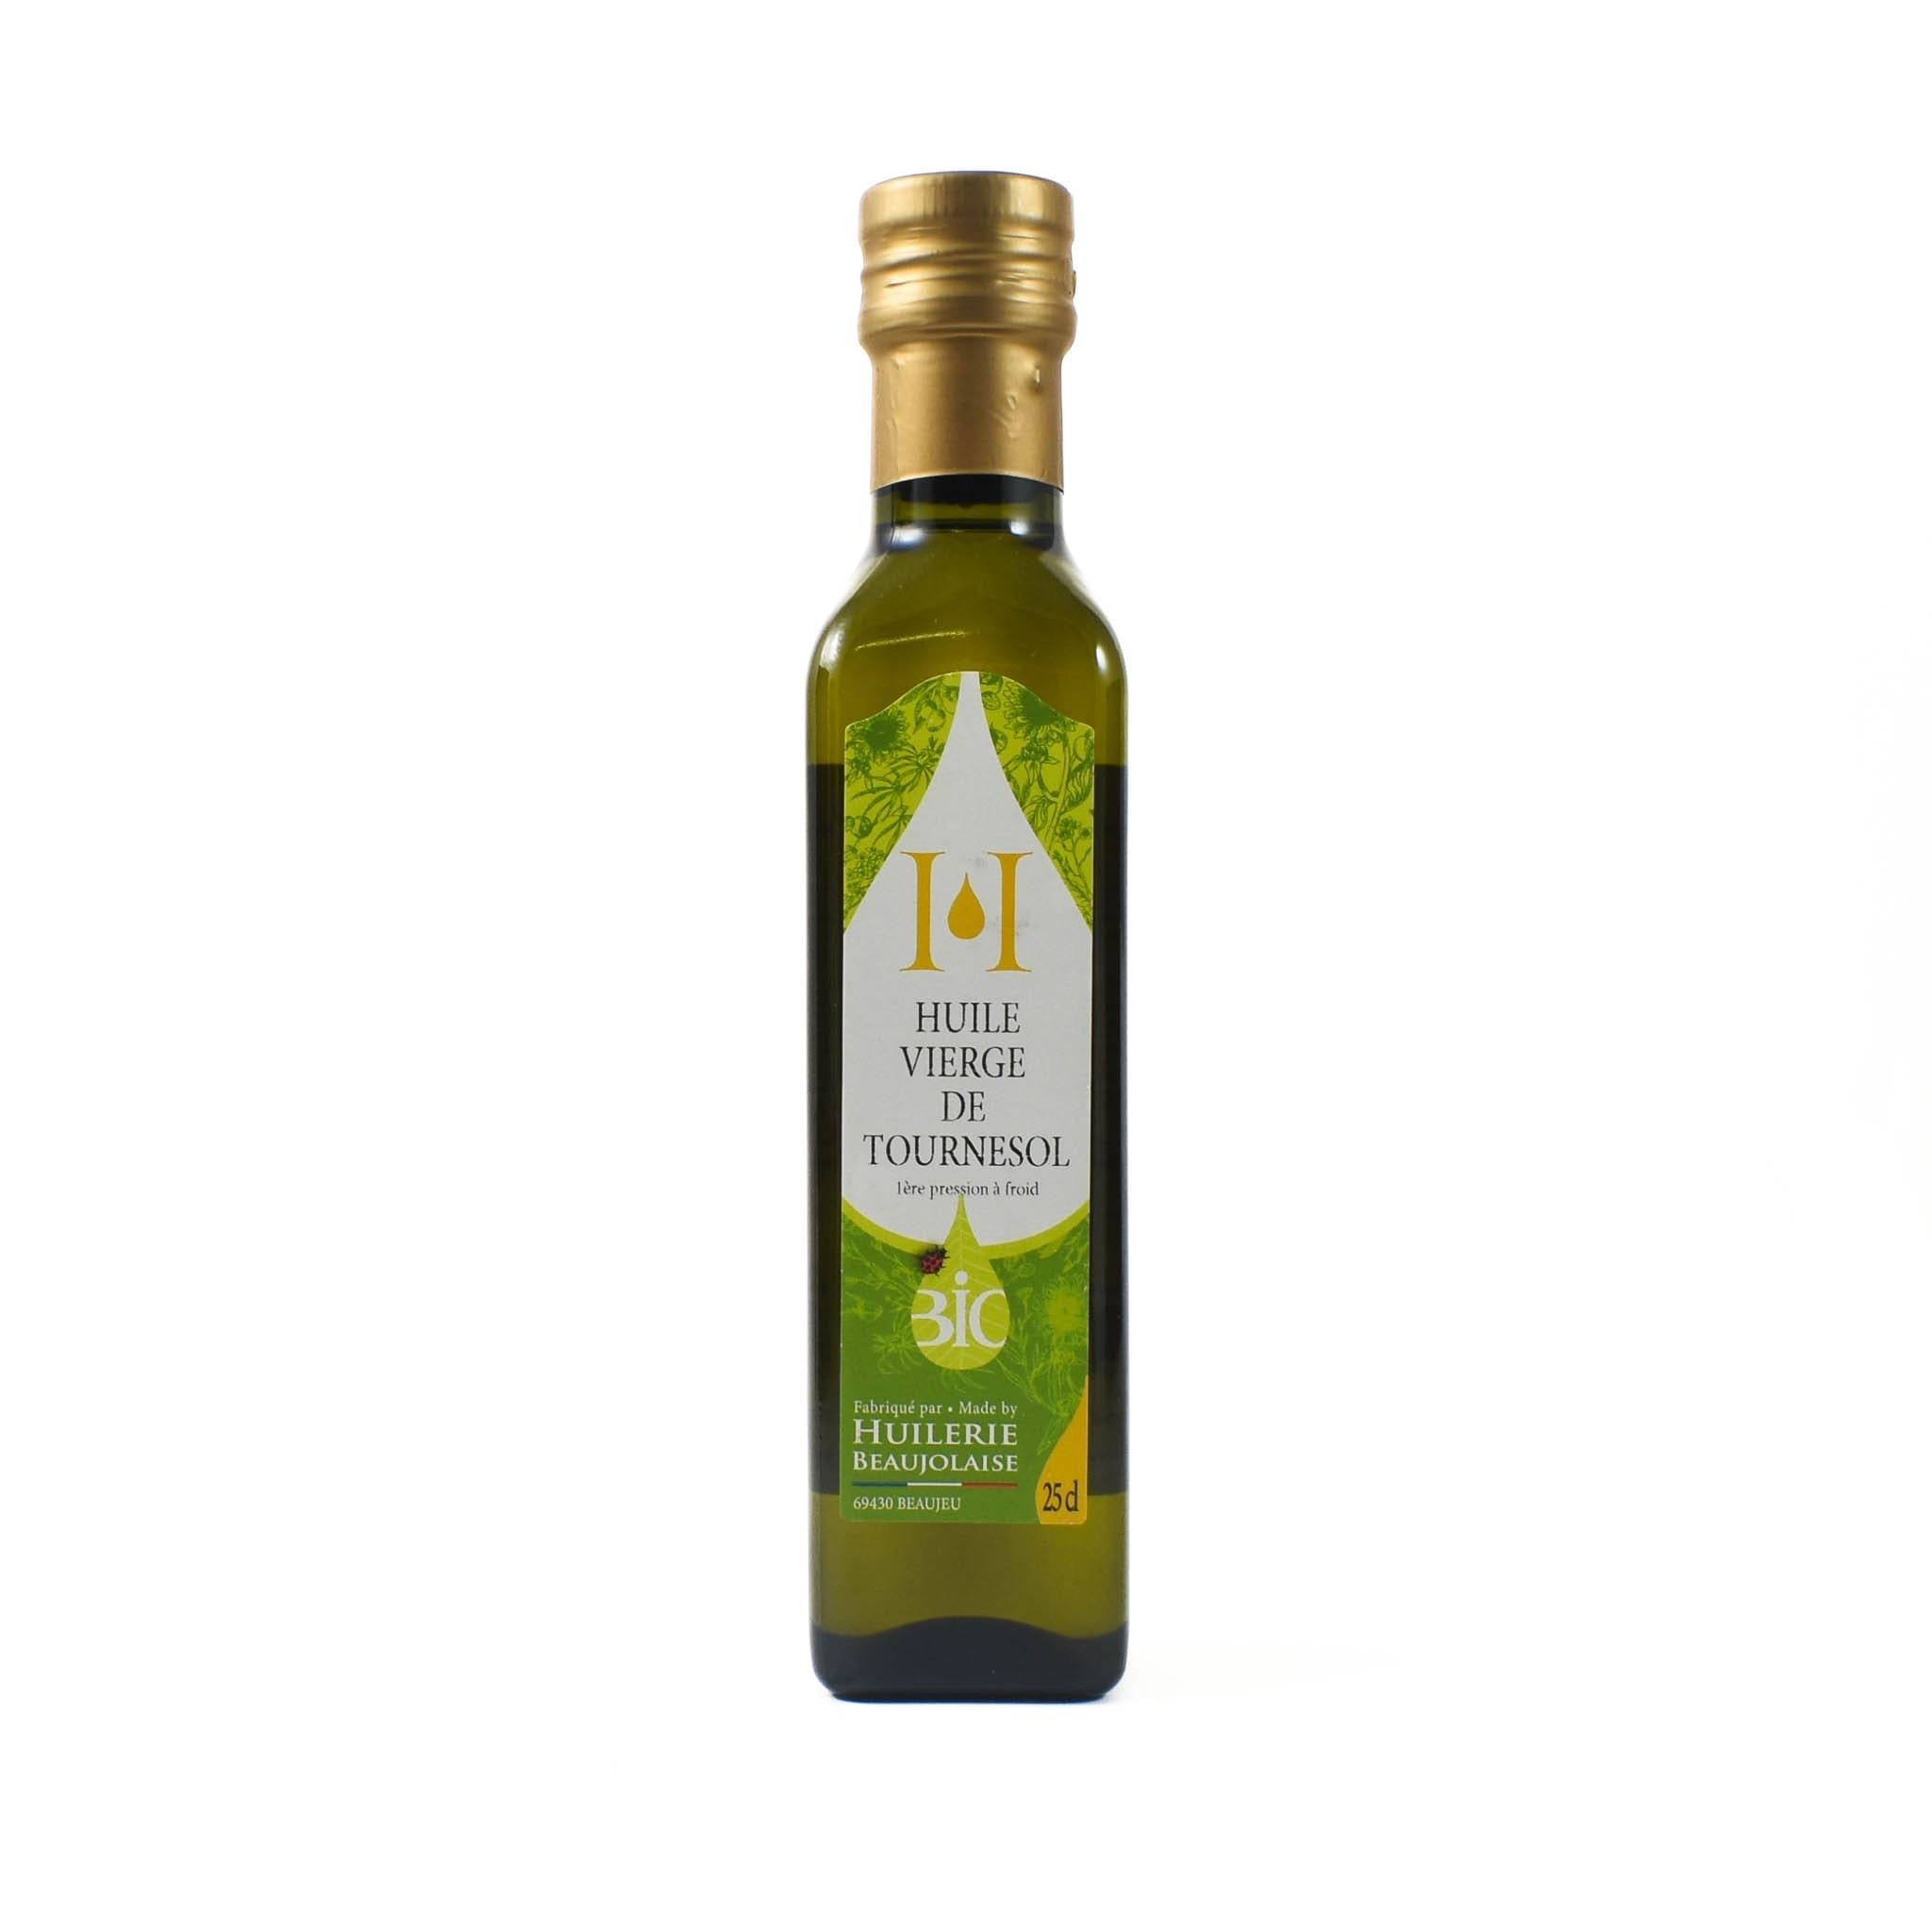 Huilerie Beaujolaise 1st Cold Pressed Organic Sunflower Oil, 250ml